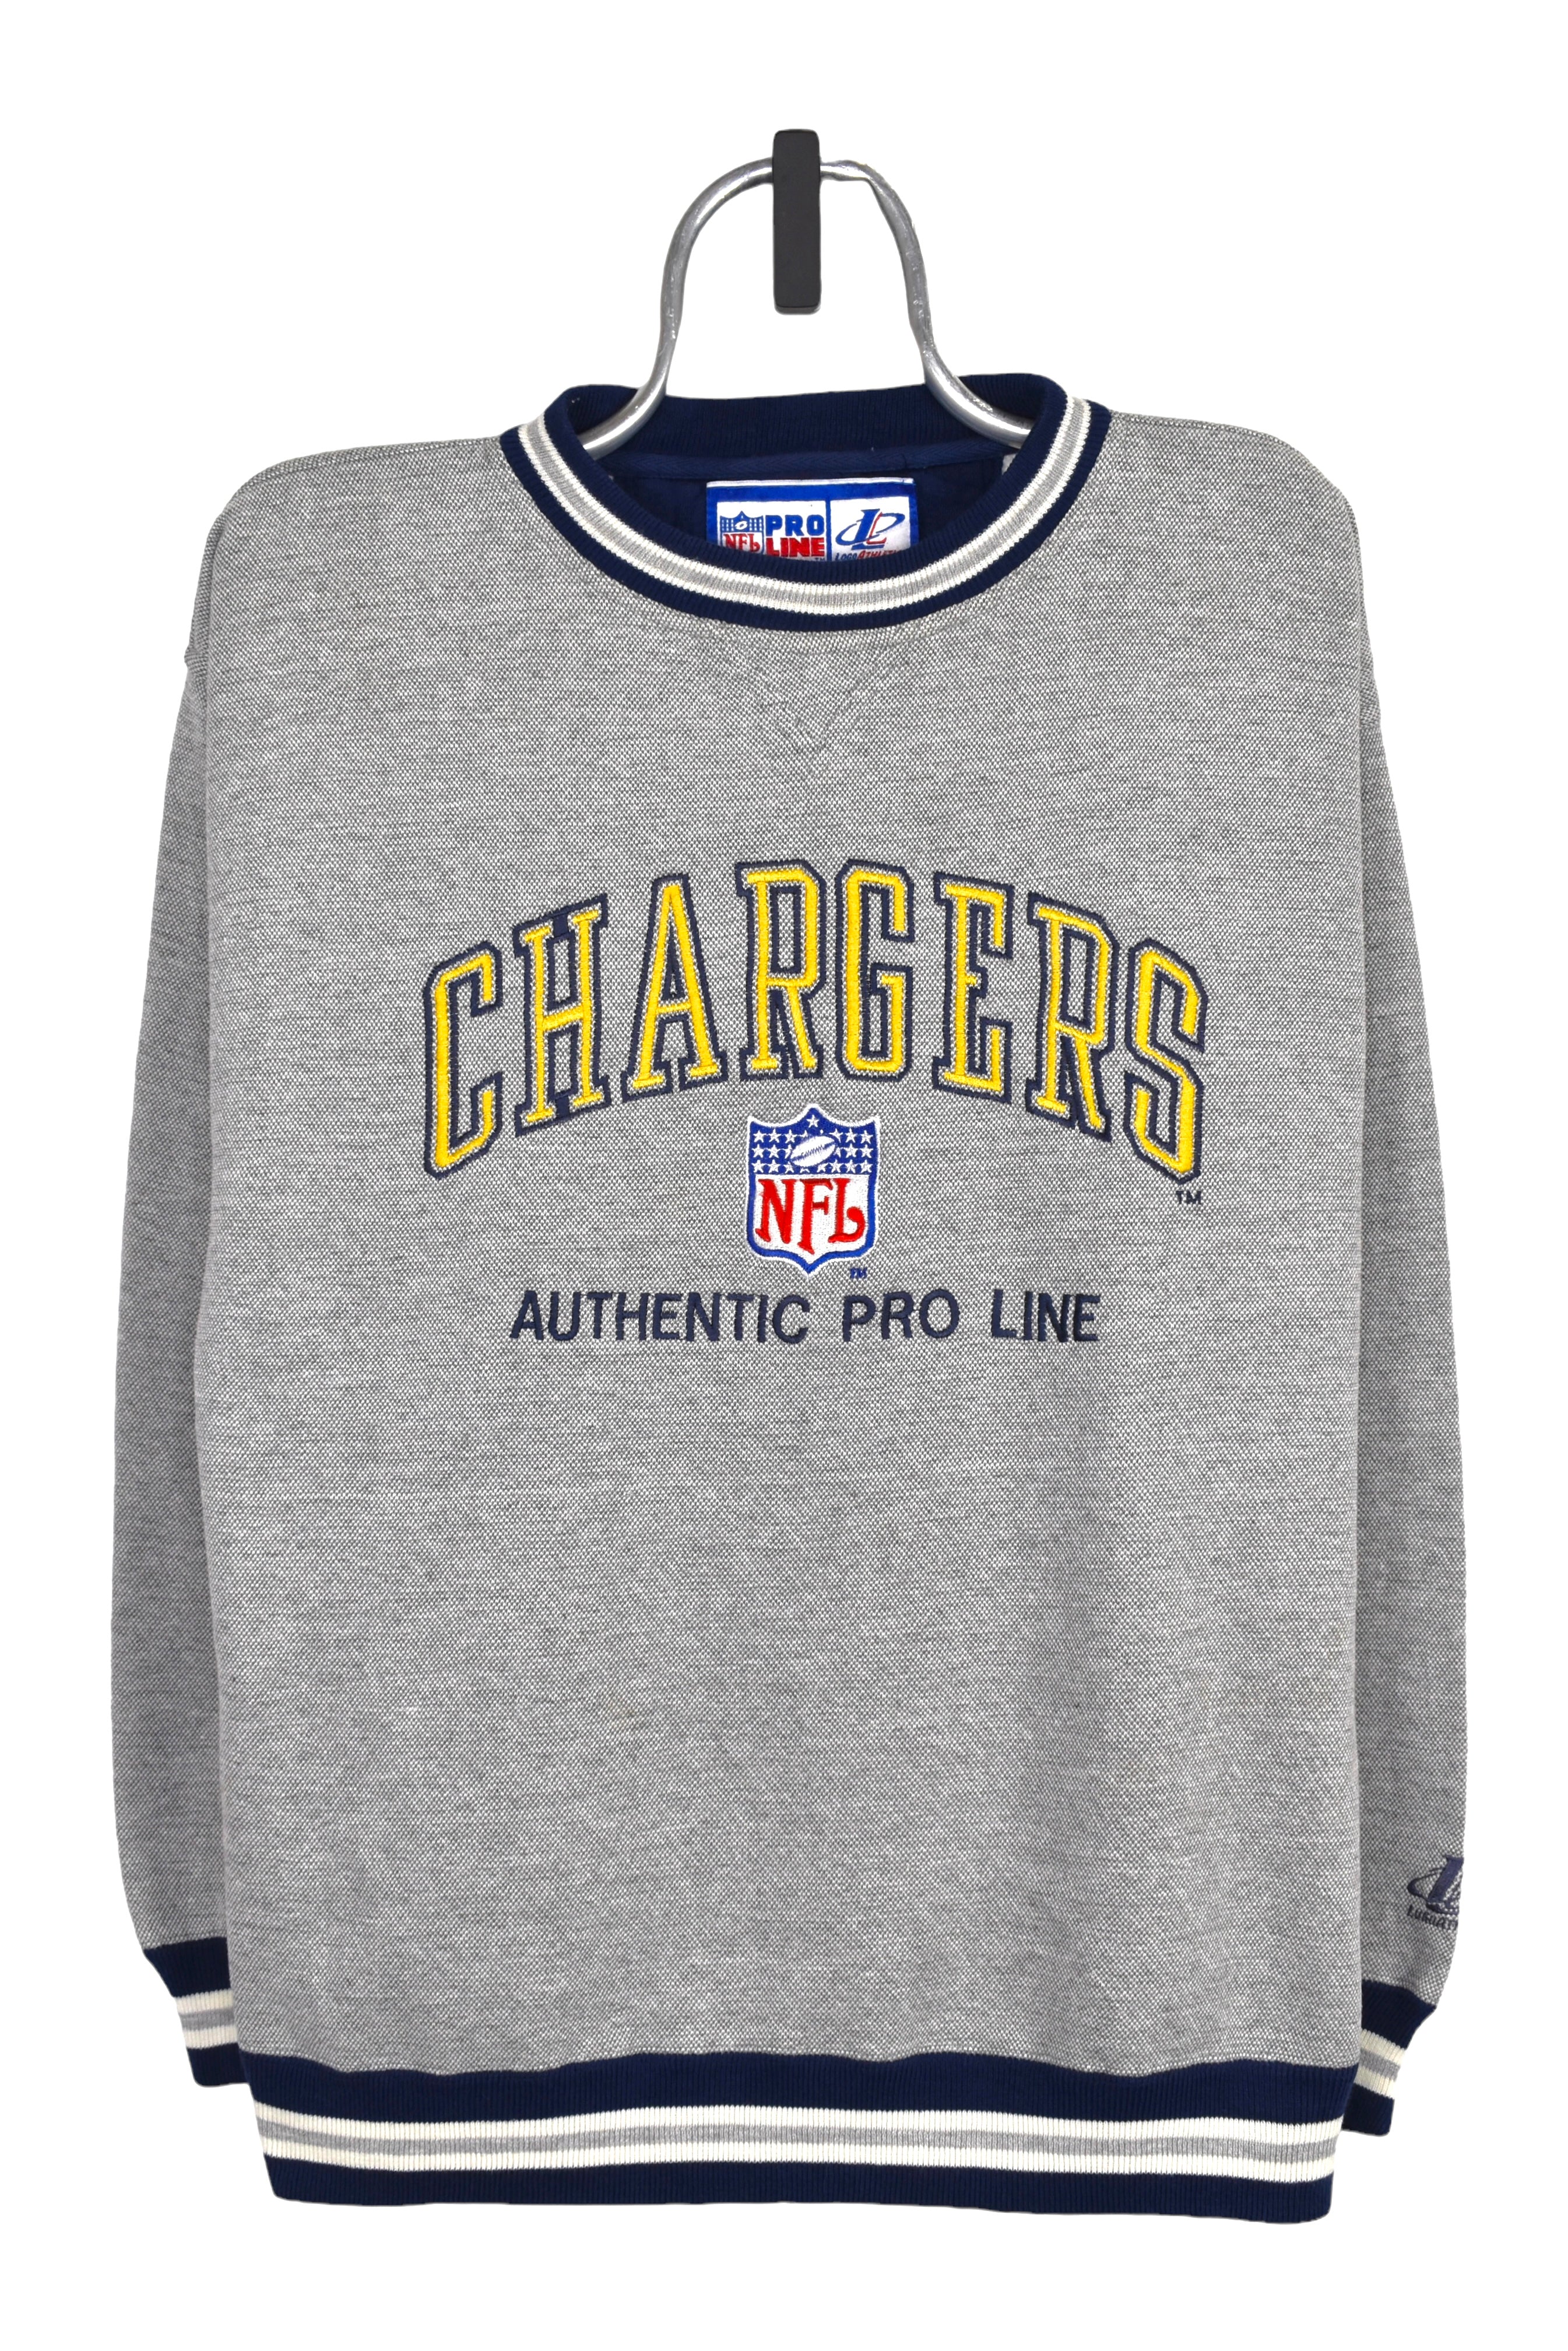 Vintage LA Chargers sweatshirt (XL), grey NFL embroidered crewneck